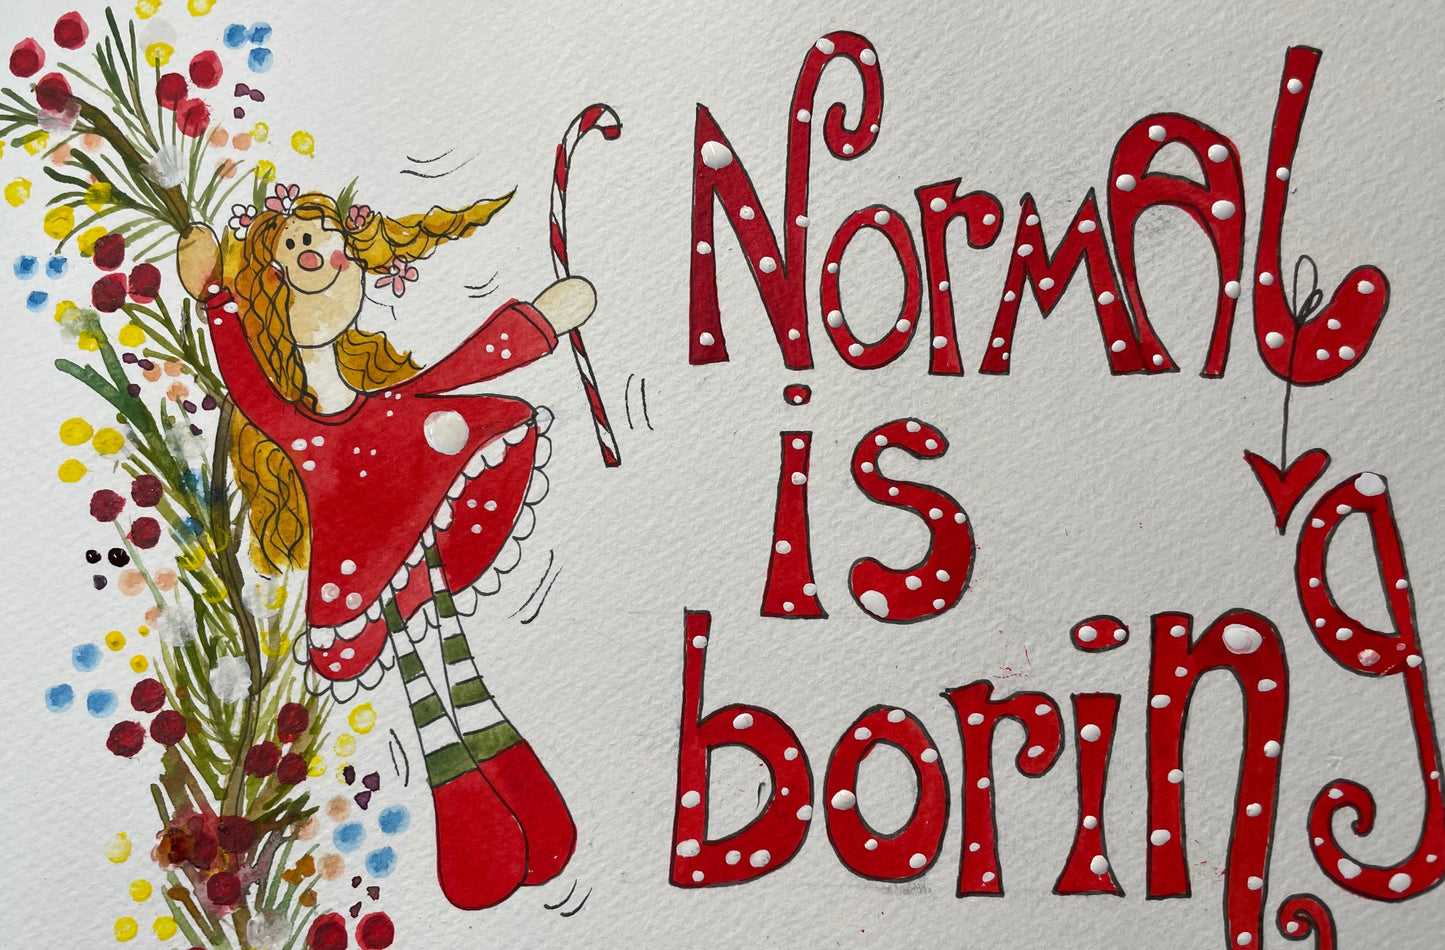 "Normal is boring" Jul